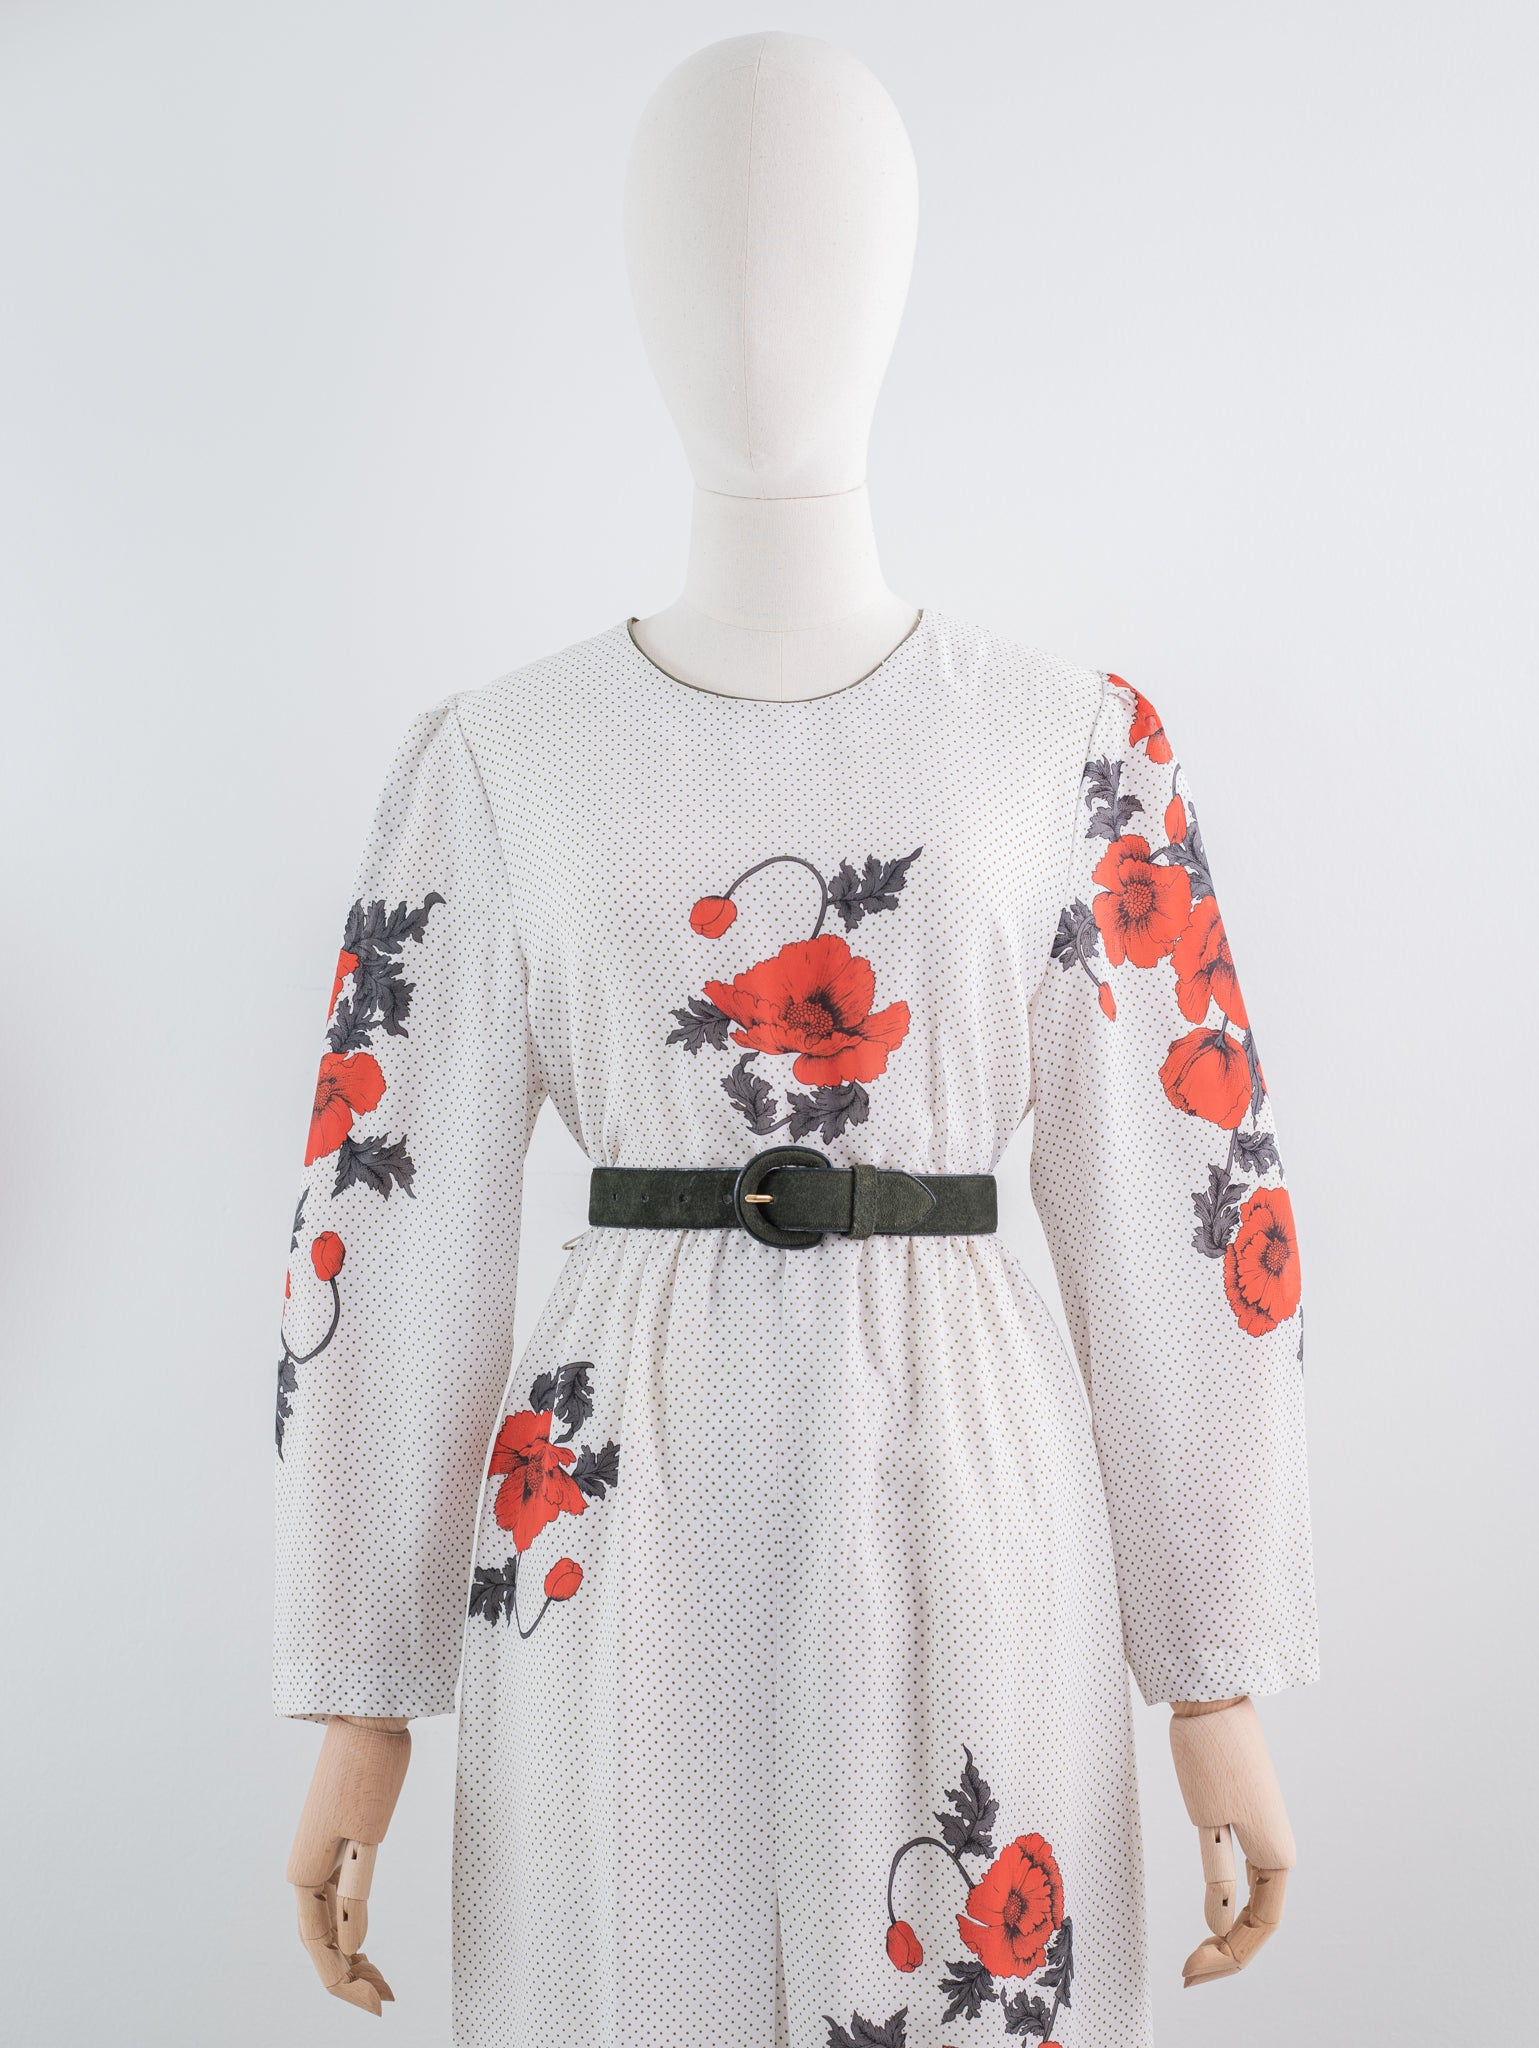 Poppy floral vintage dress